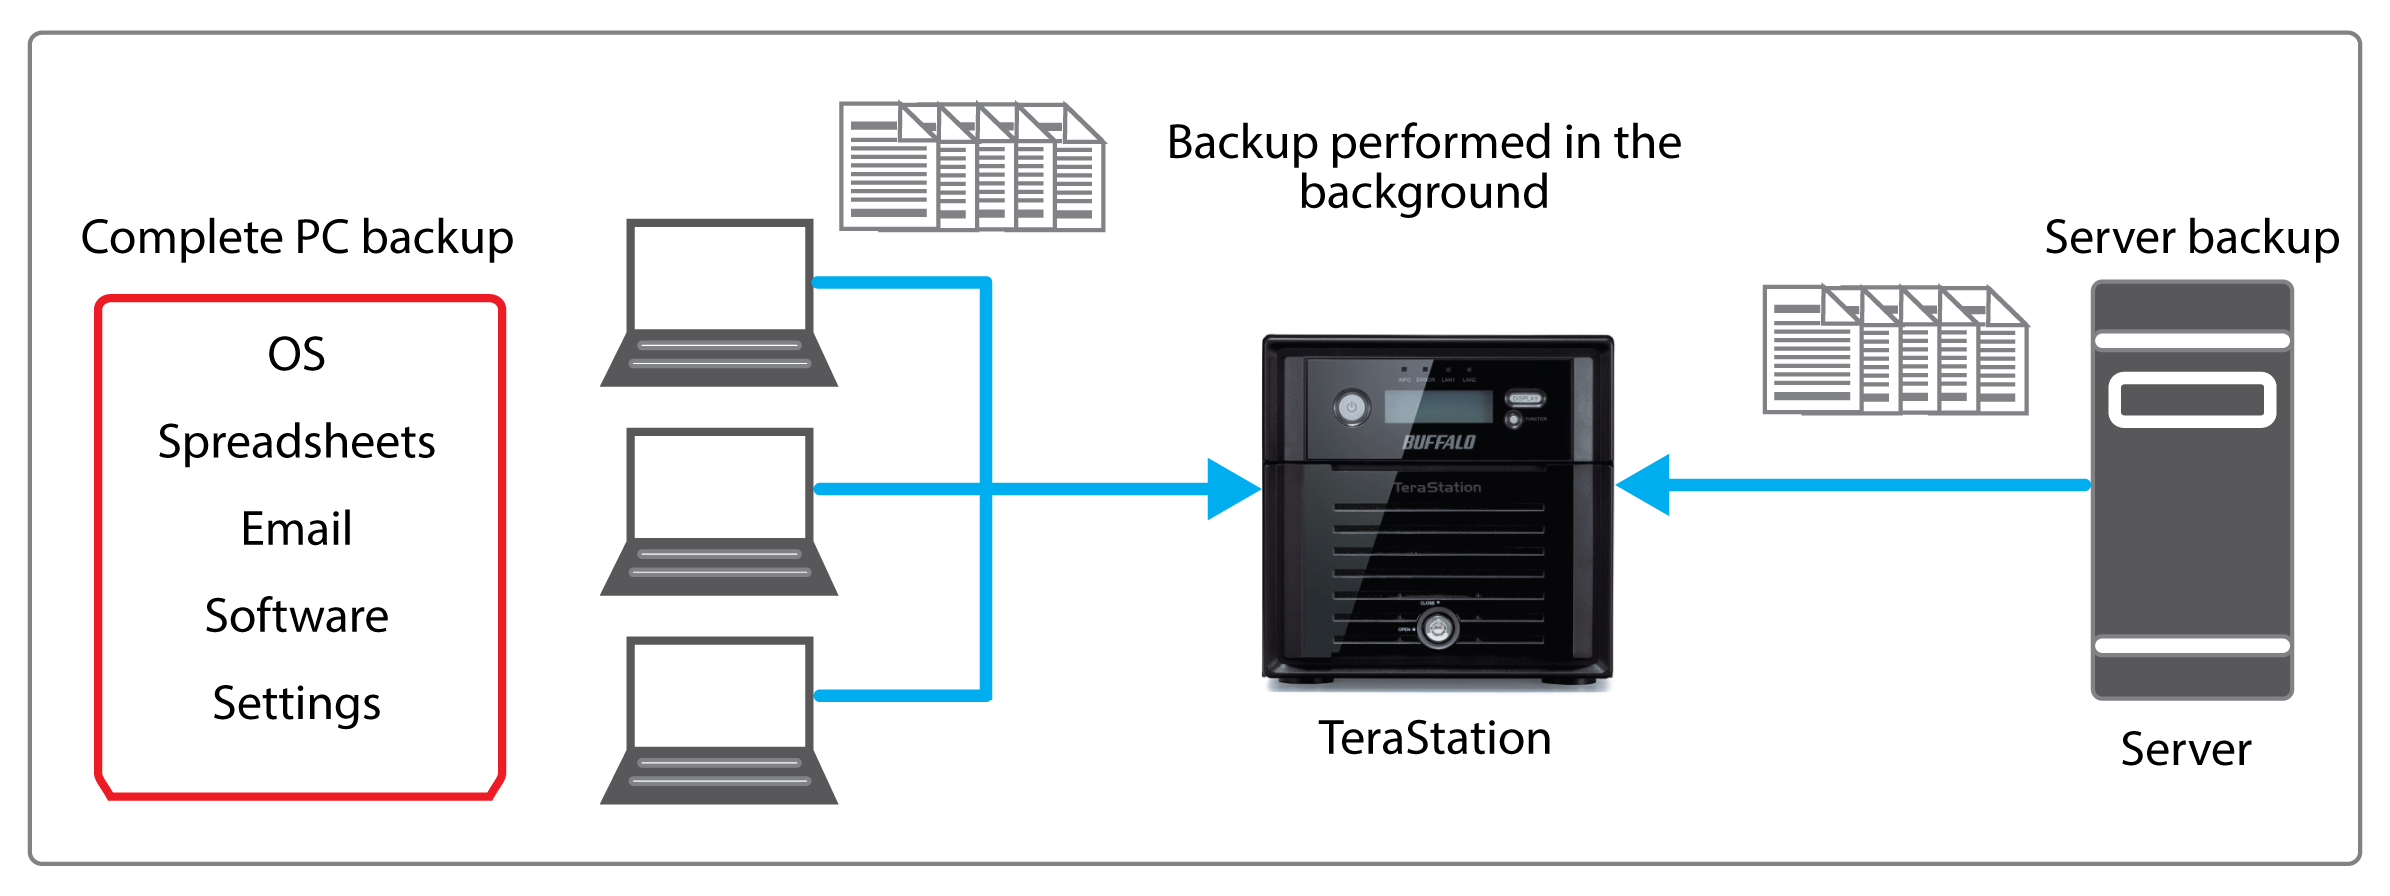 terastation 5000 wss data protection and backup